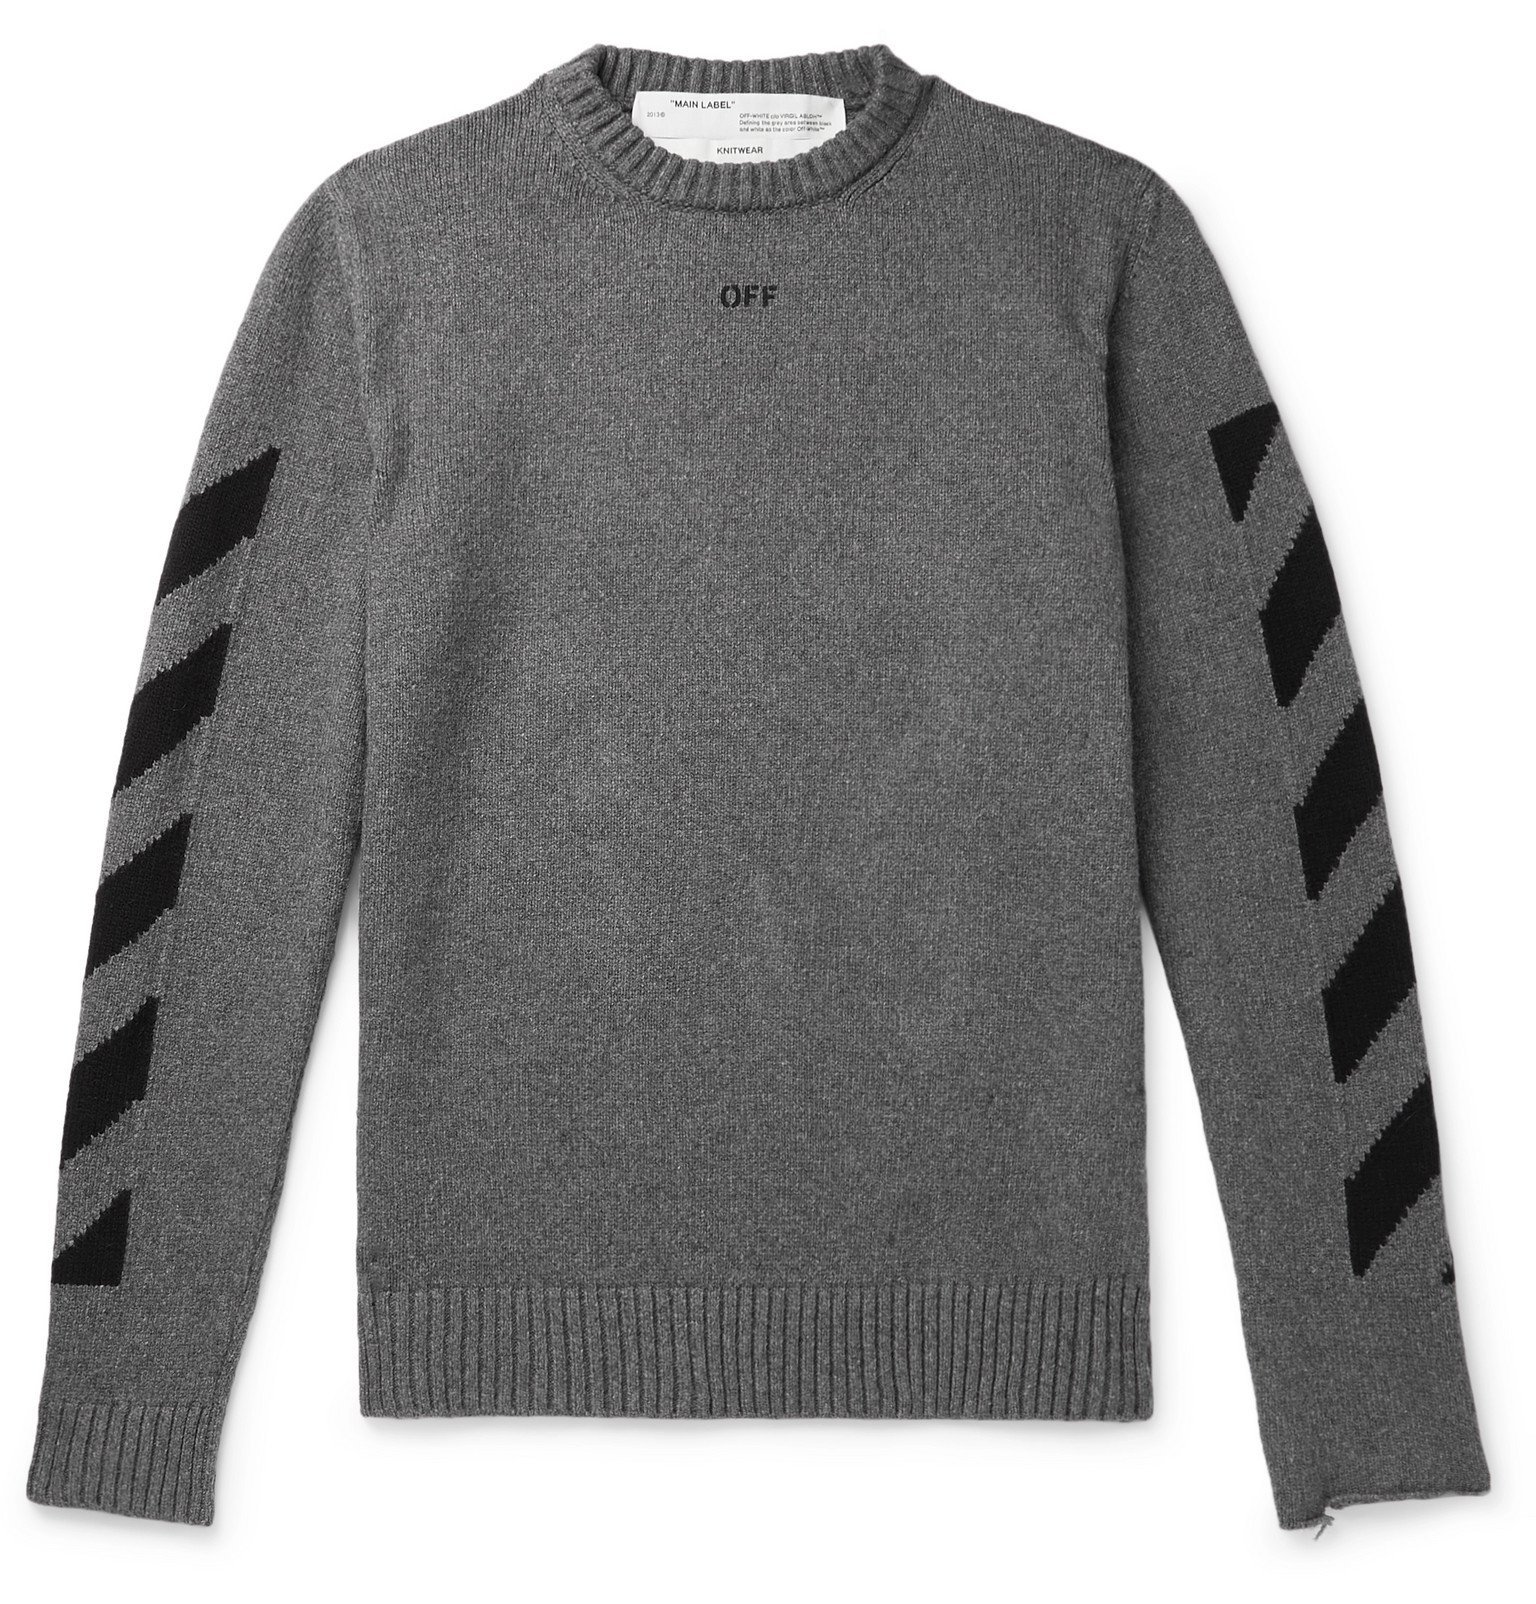 Off-White - Cotton-Jacquard Sweater - Gray Off-White